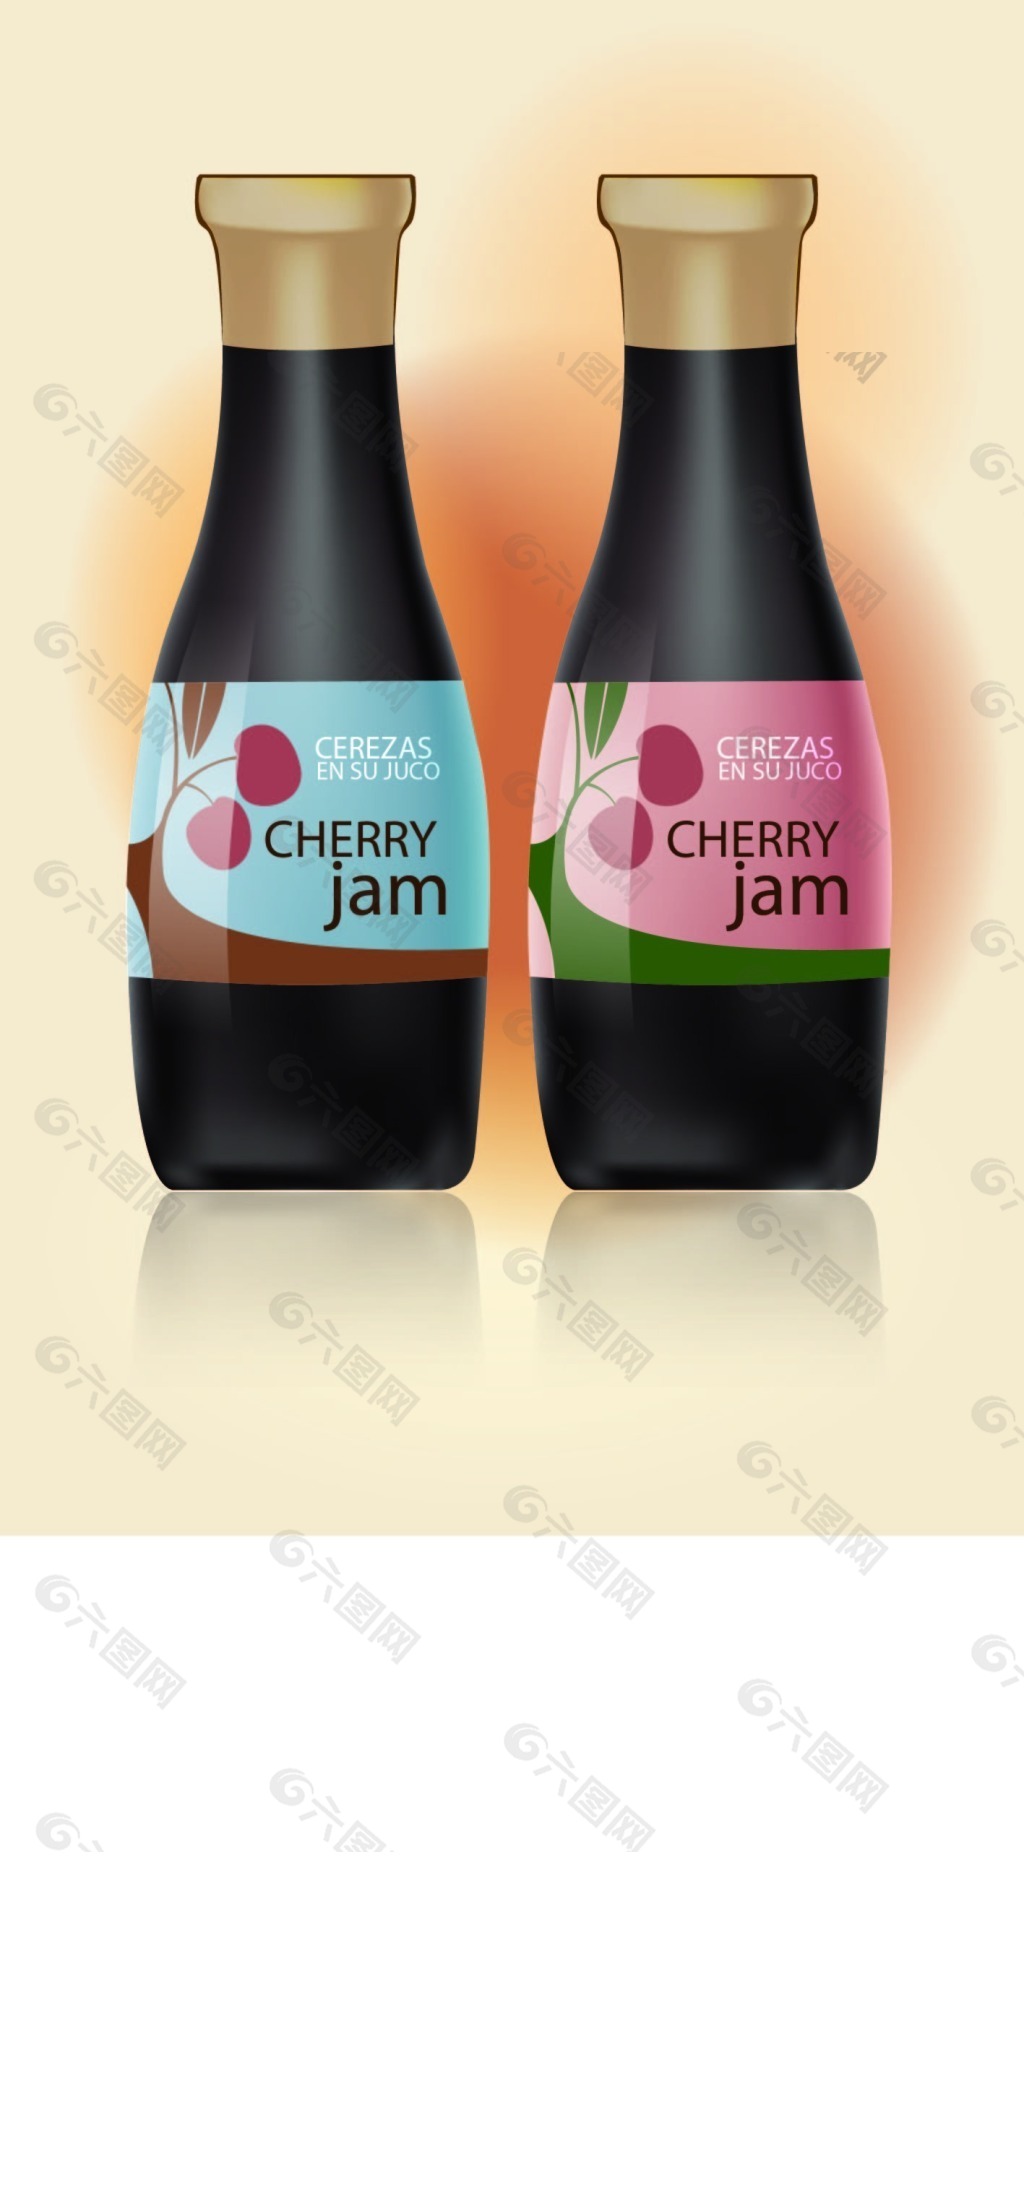 cherry jam果酱包装设计